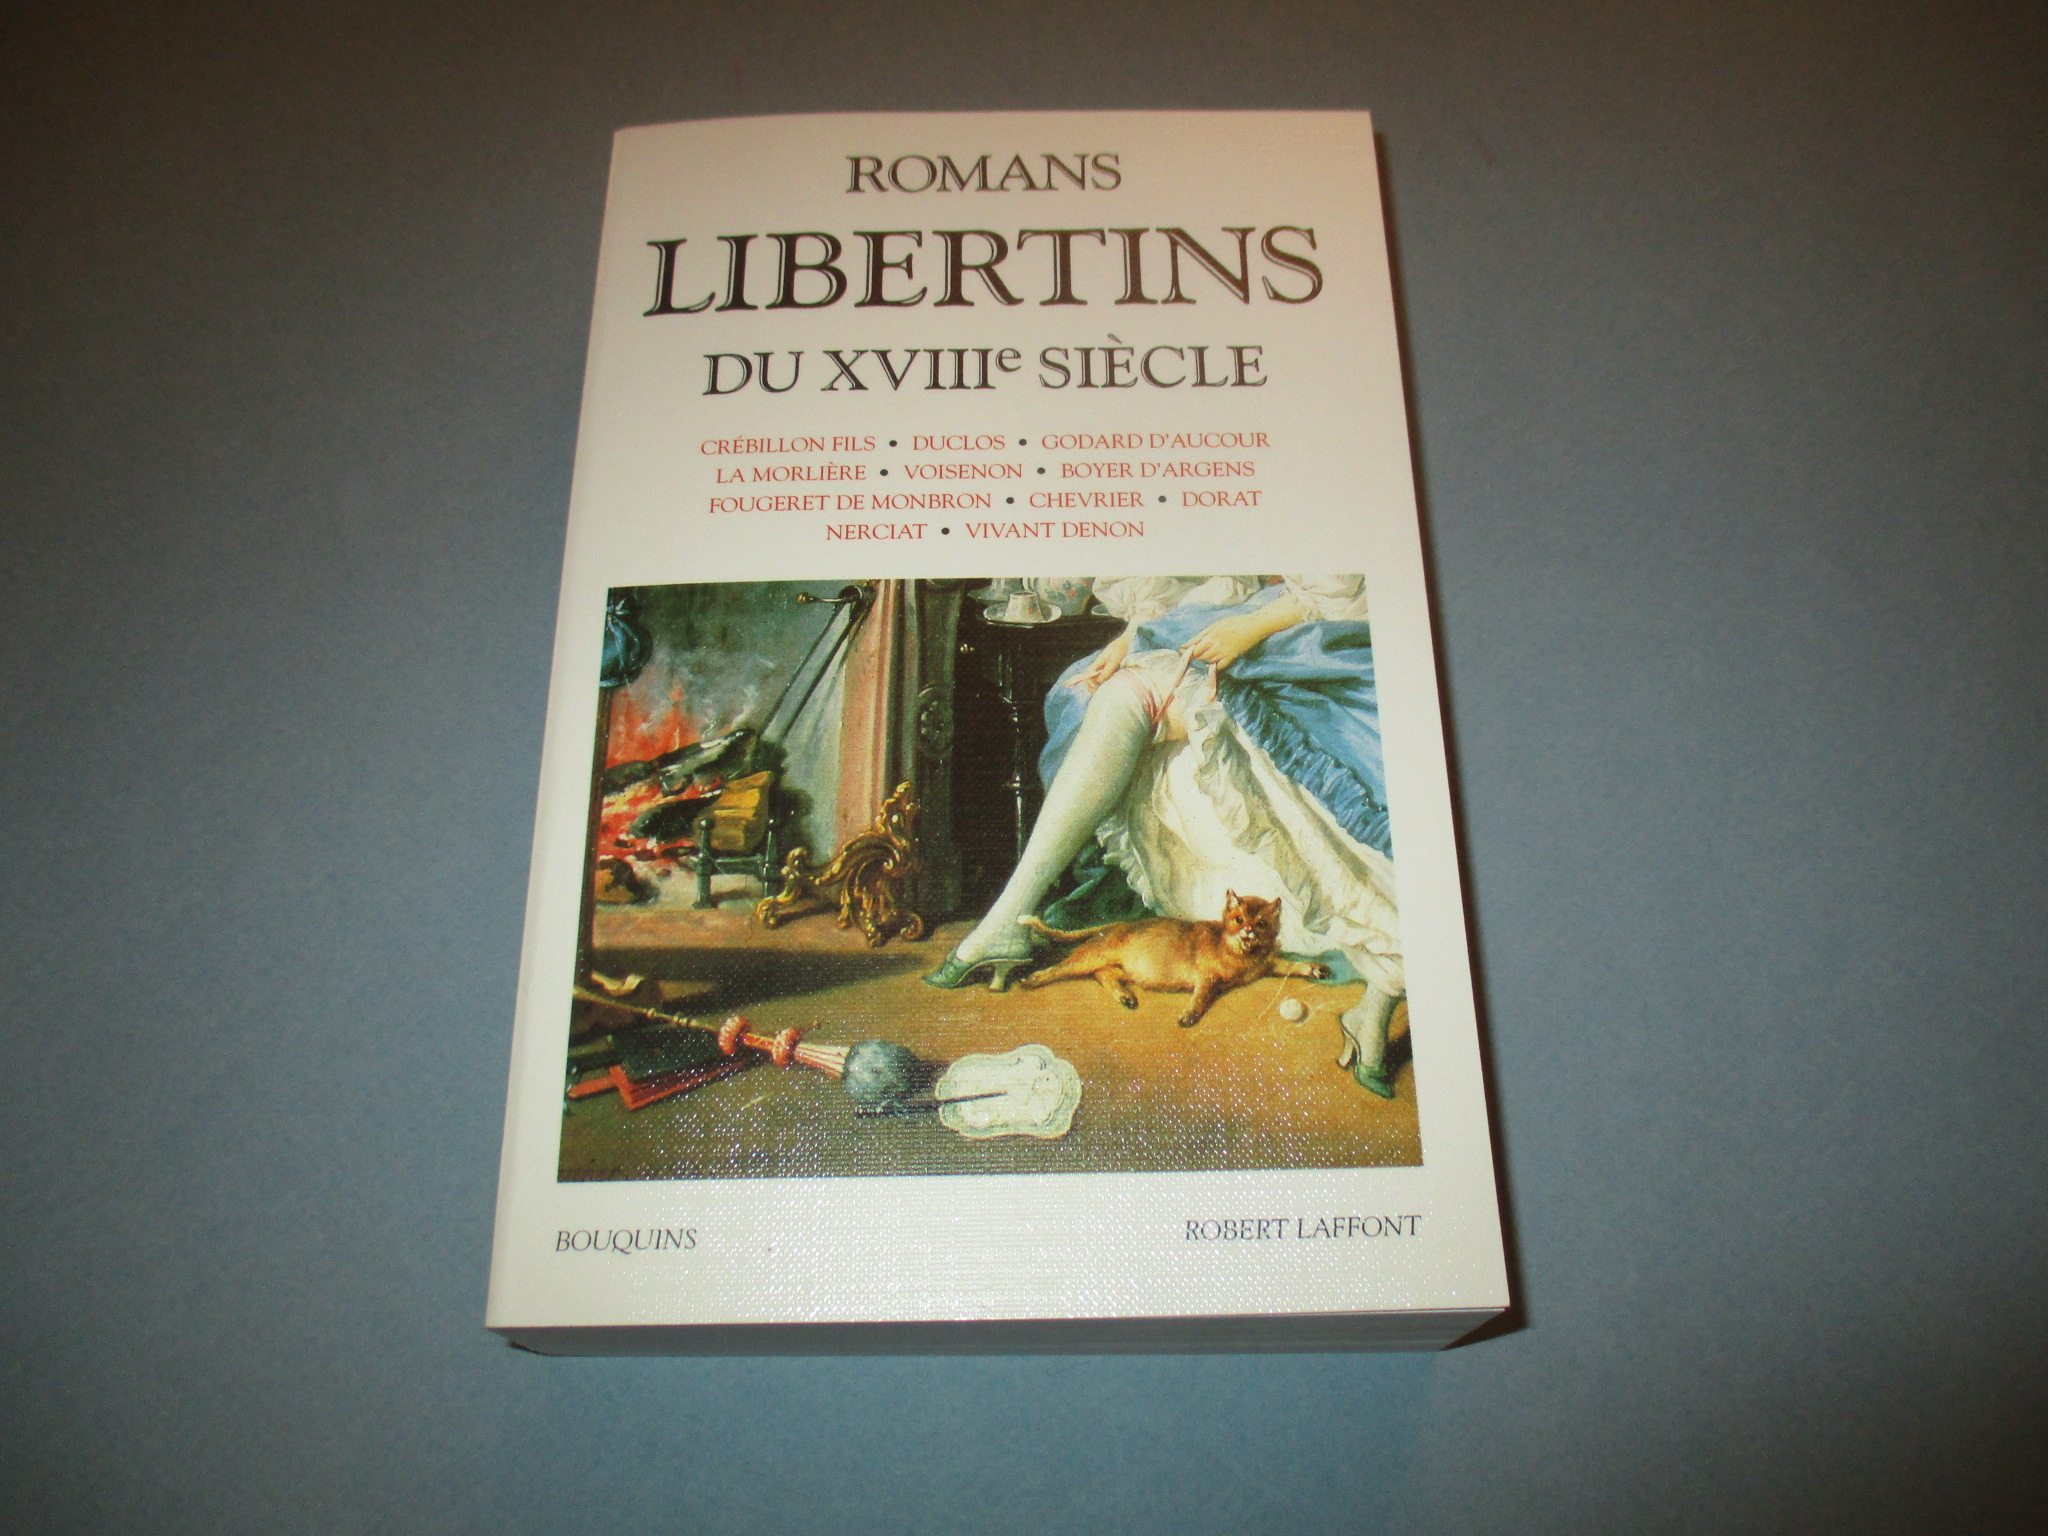 Romans libertins du XVIIIe siècle, 11 oeuvres, Bouquins Robert Laffont